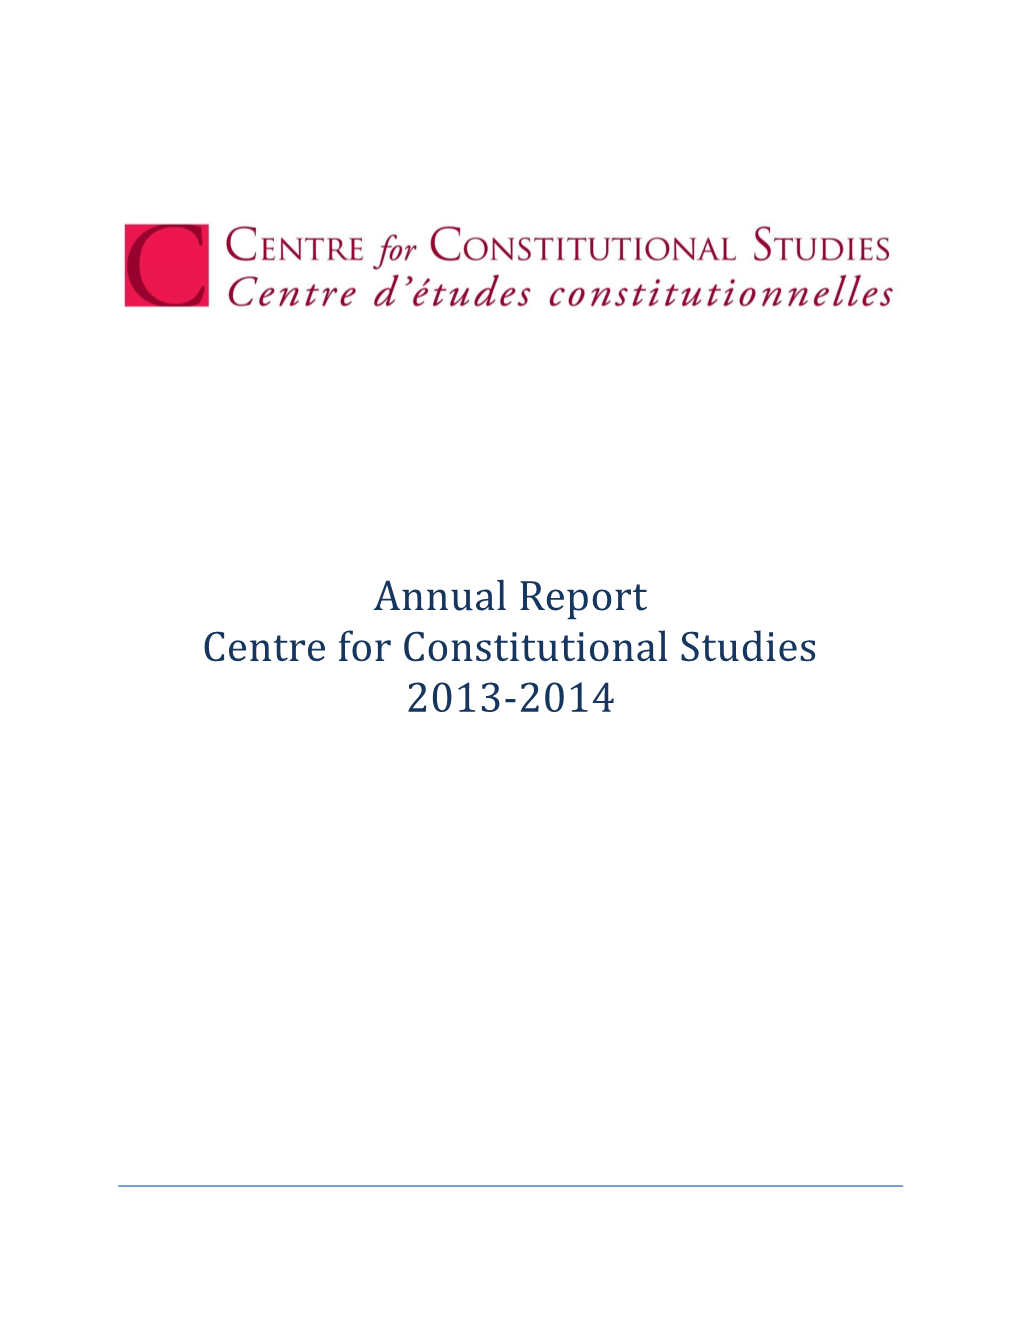 Annual Report Centre for Constitutional Studies 2013-2014